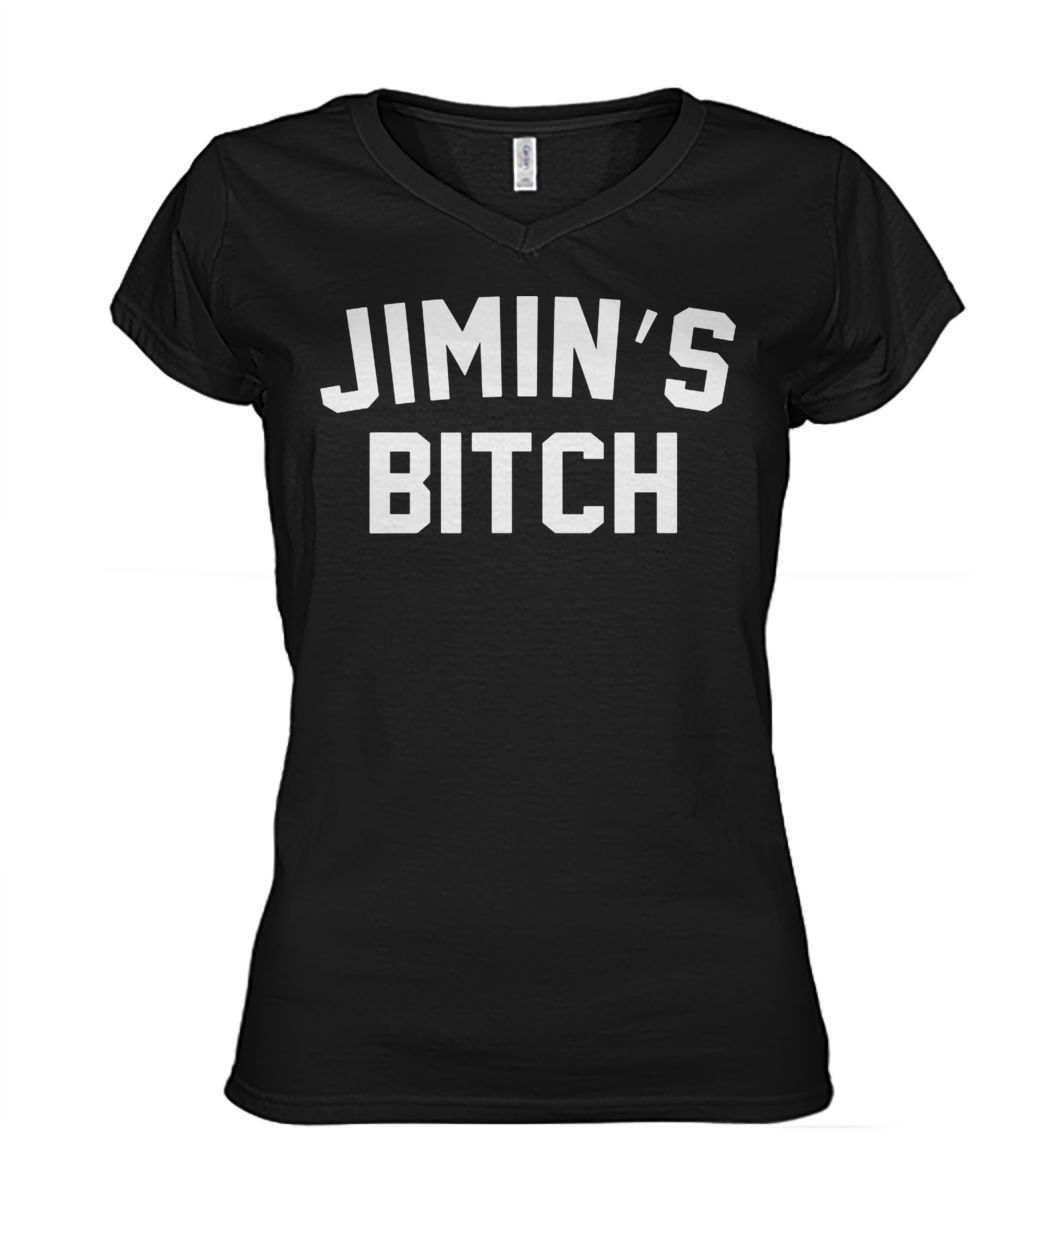 Official Jimin's bitch women's v-neck